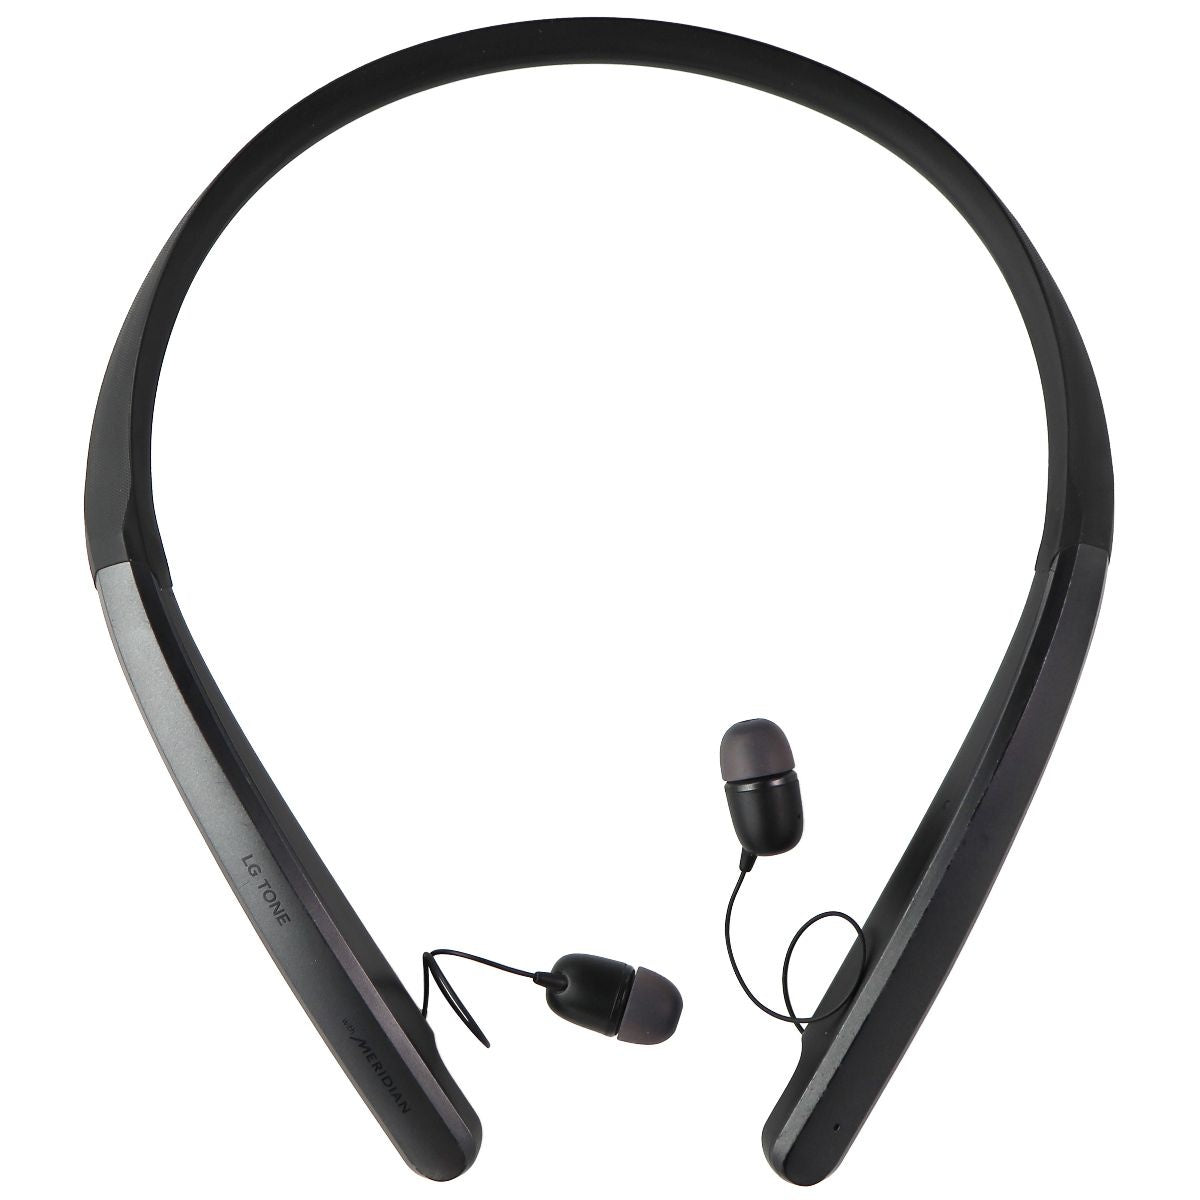 LG Tone Flex Hi-Fi Premium Wireless In-Ear Headphones - Black (HBS-XL7) Portable Audio - Headphones LG    - Simple Cell Bulk Wholesale Pricing - USA Seller